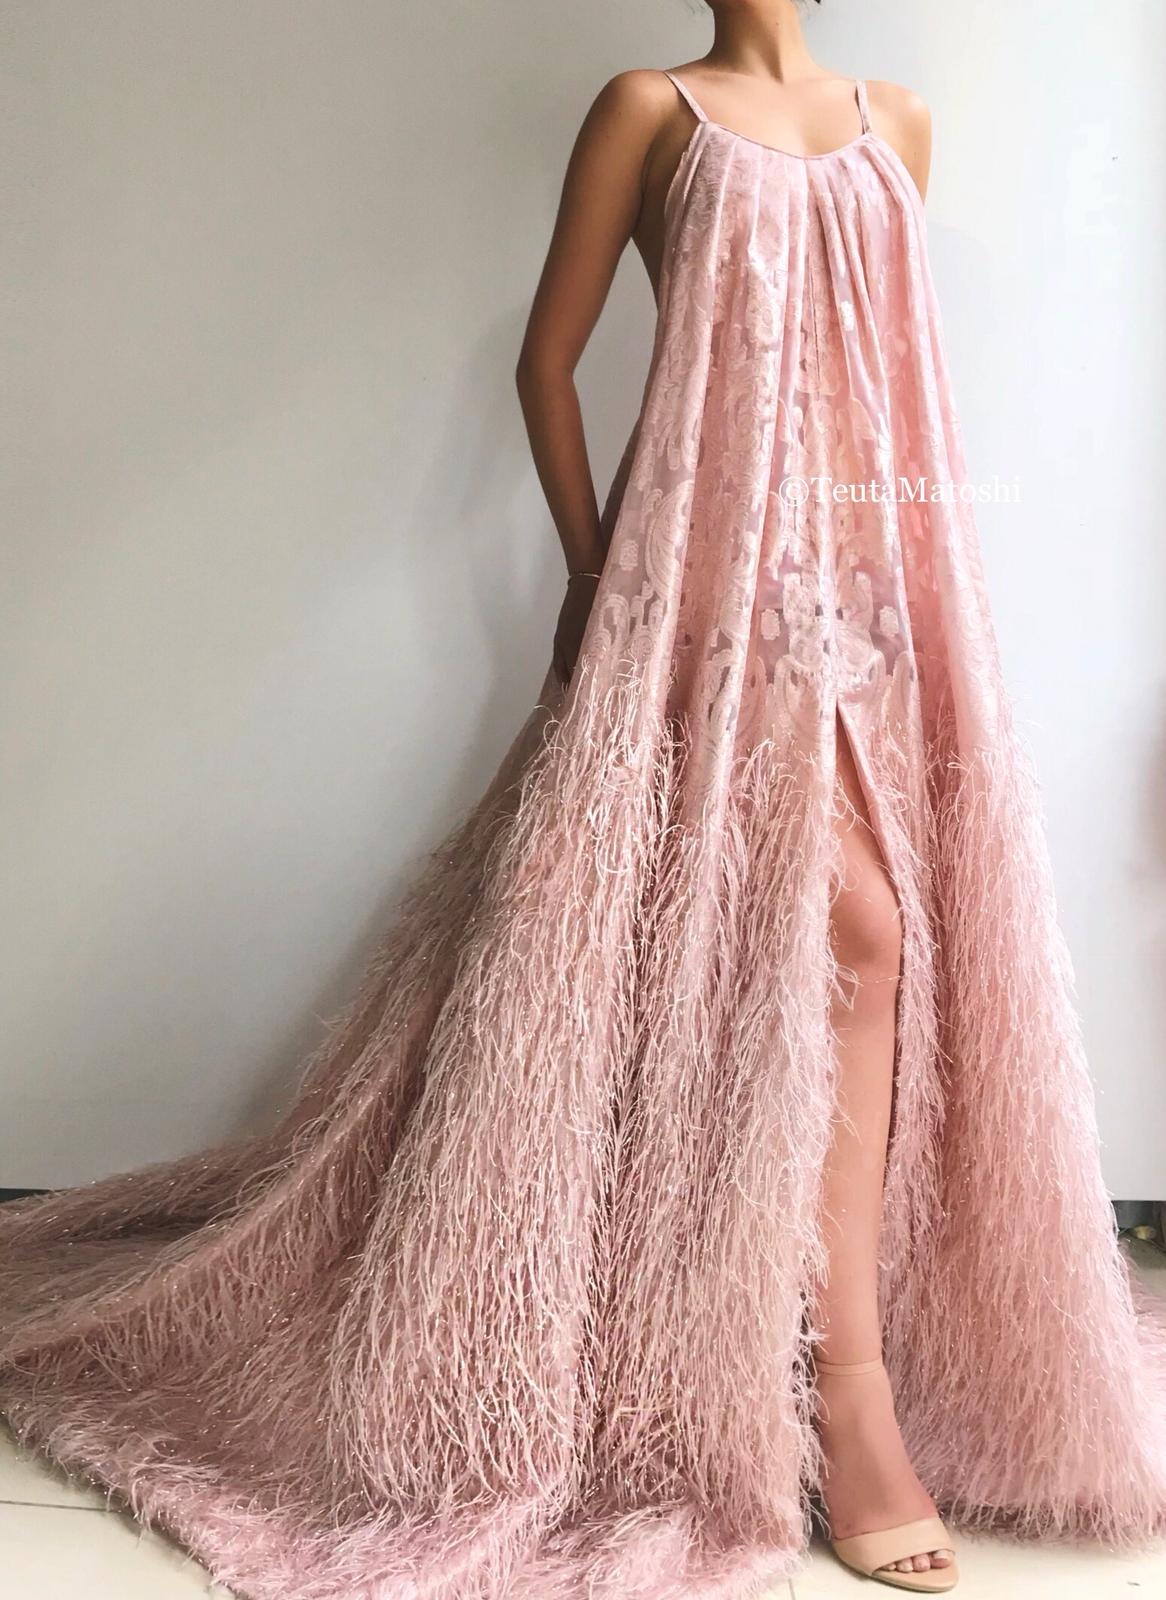 Pink sheath dress with spaghetti straps